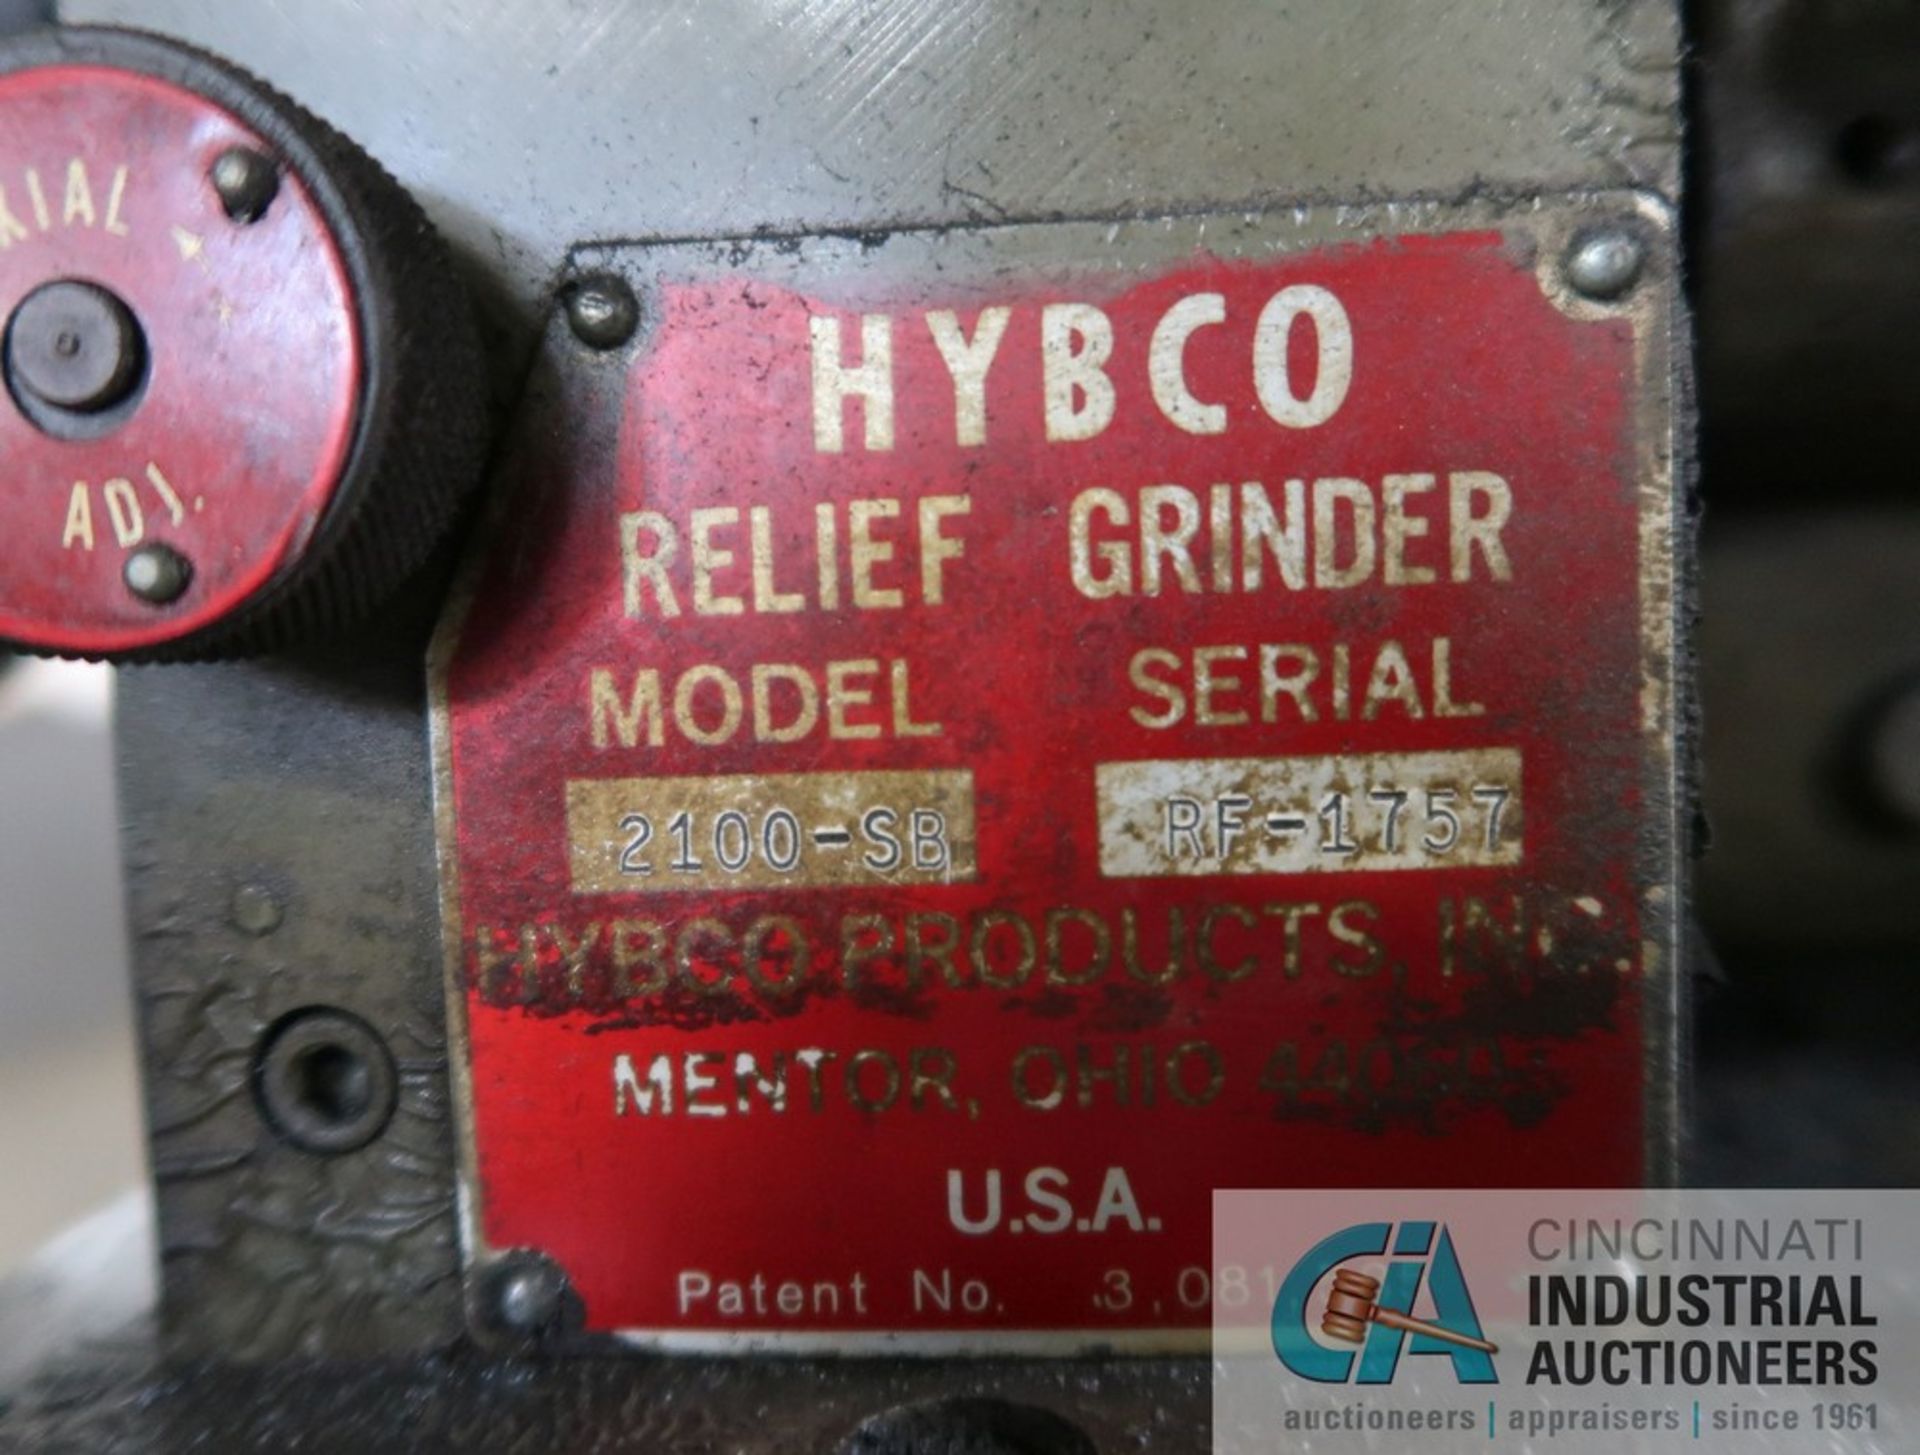 HYBCO MODEL 1900 UNIVERSAL TOOL GRINDER; S/N TG-431I, WITH HYBCO MODEL 2100-SB RELIEF GRINDER, - Image 7 of 11